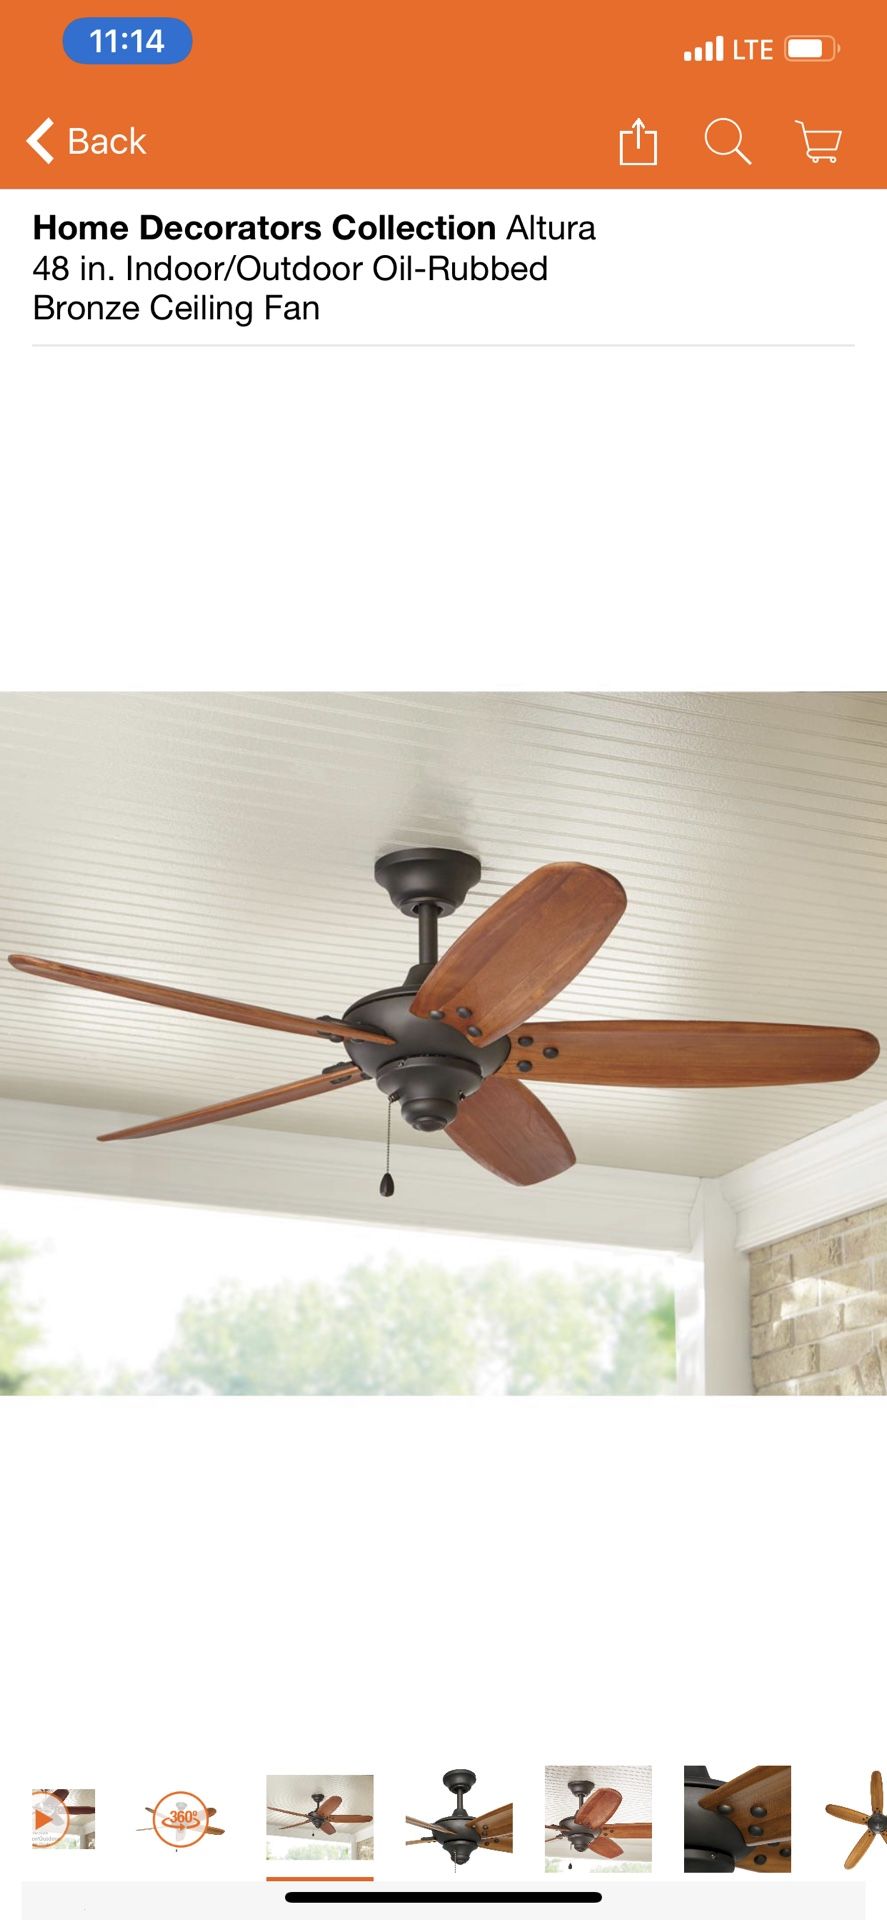 Home decorators collection 48 inch indoor outdoor ceiling fan